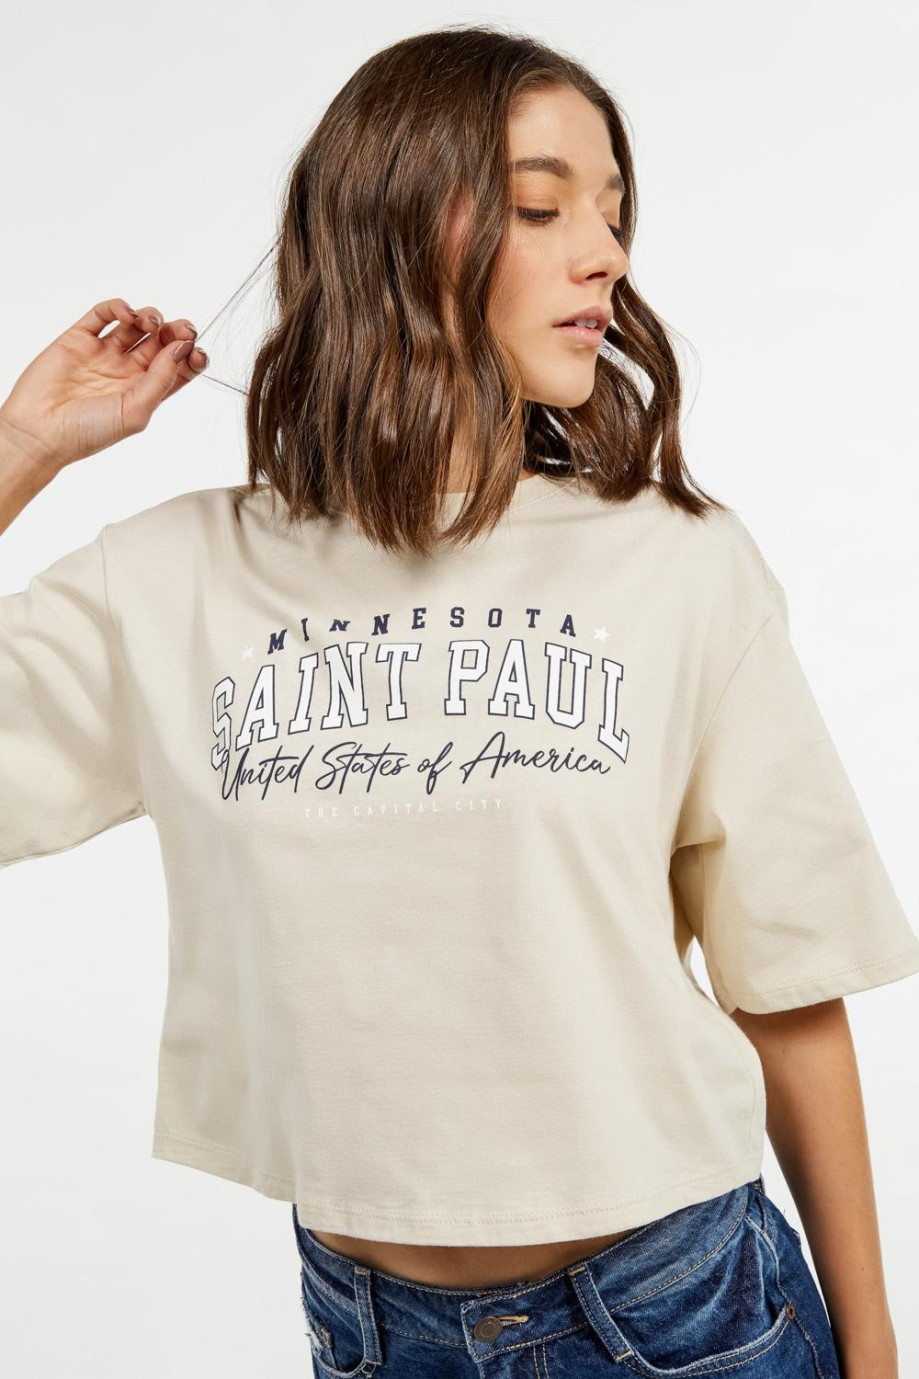 Camiseta kaki crop top oversize con estampado college